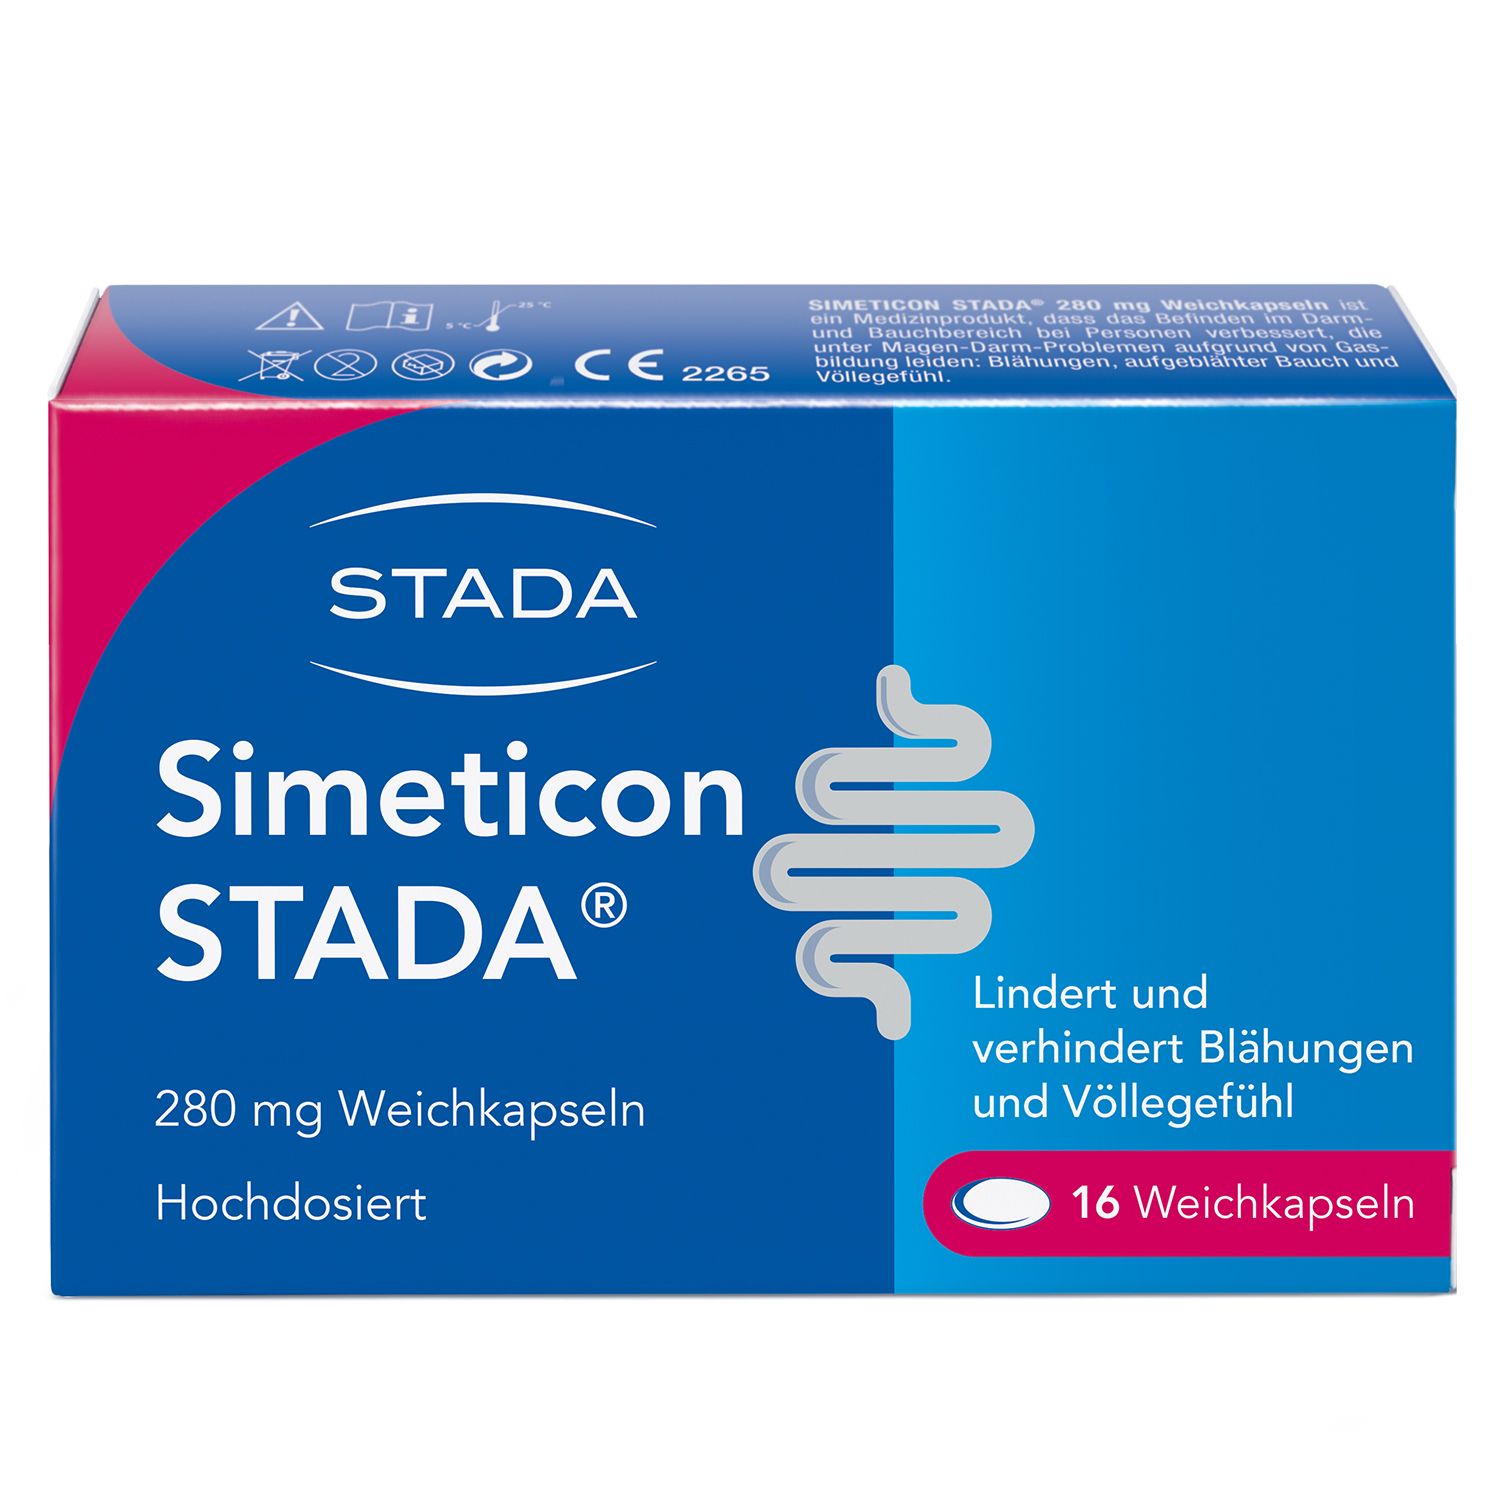 Simeticon Stada® 280 mg gegen Blähungen